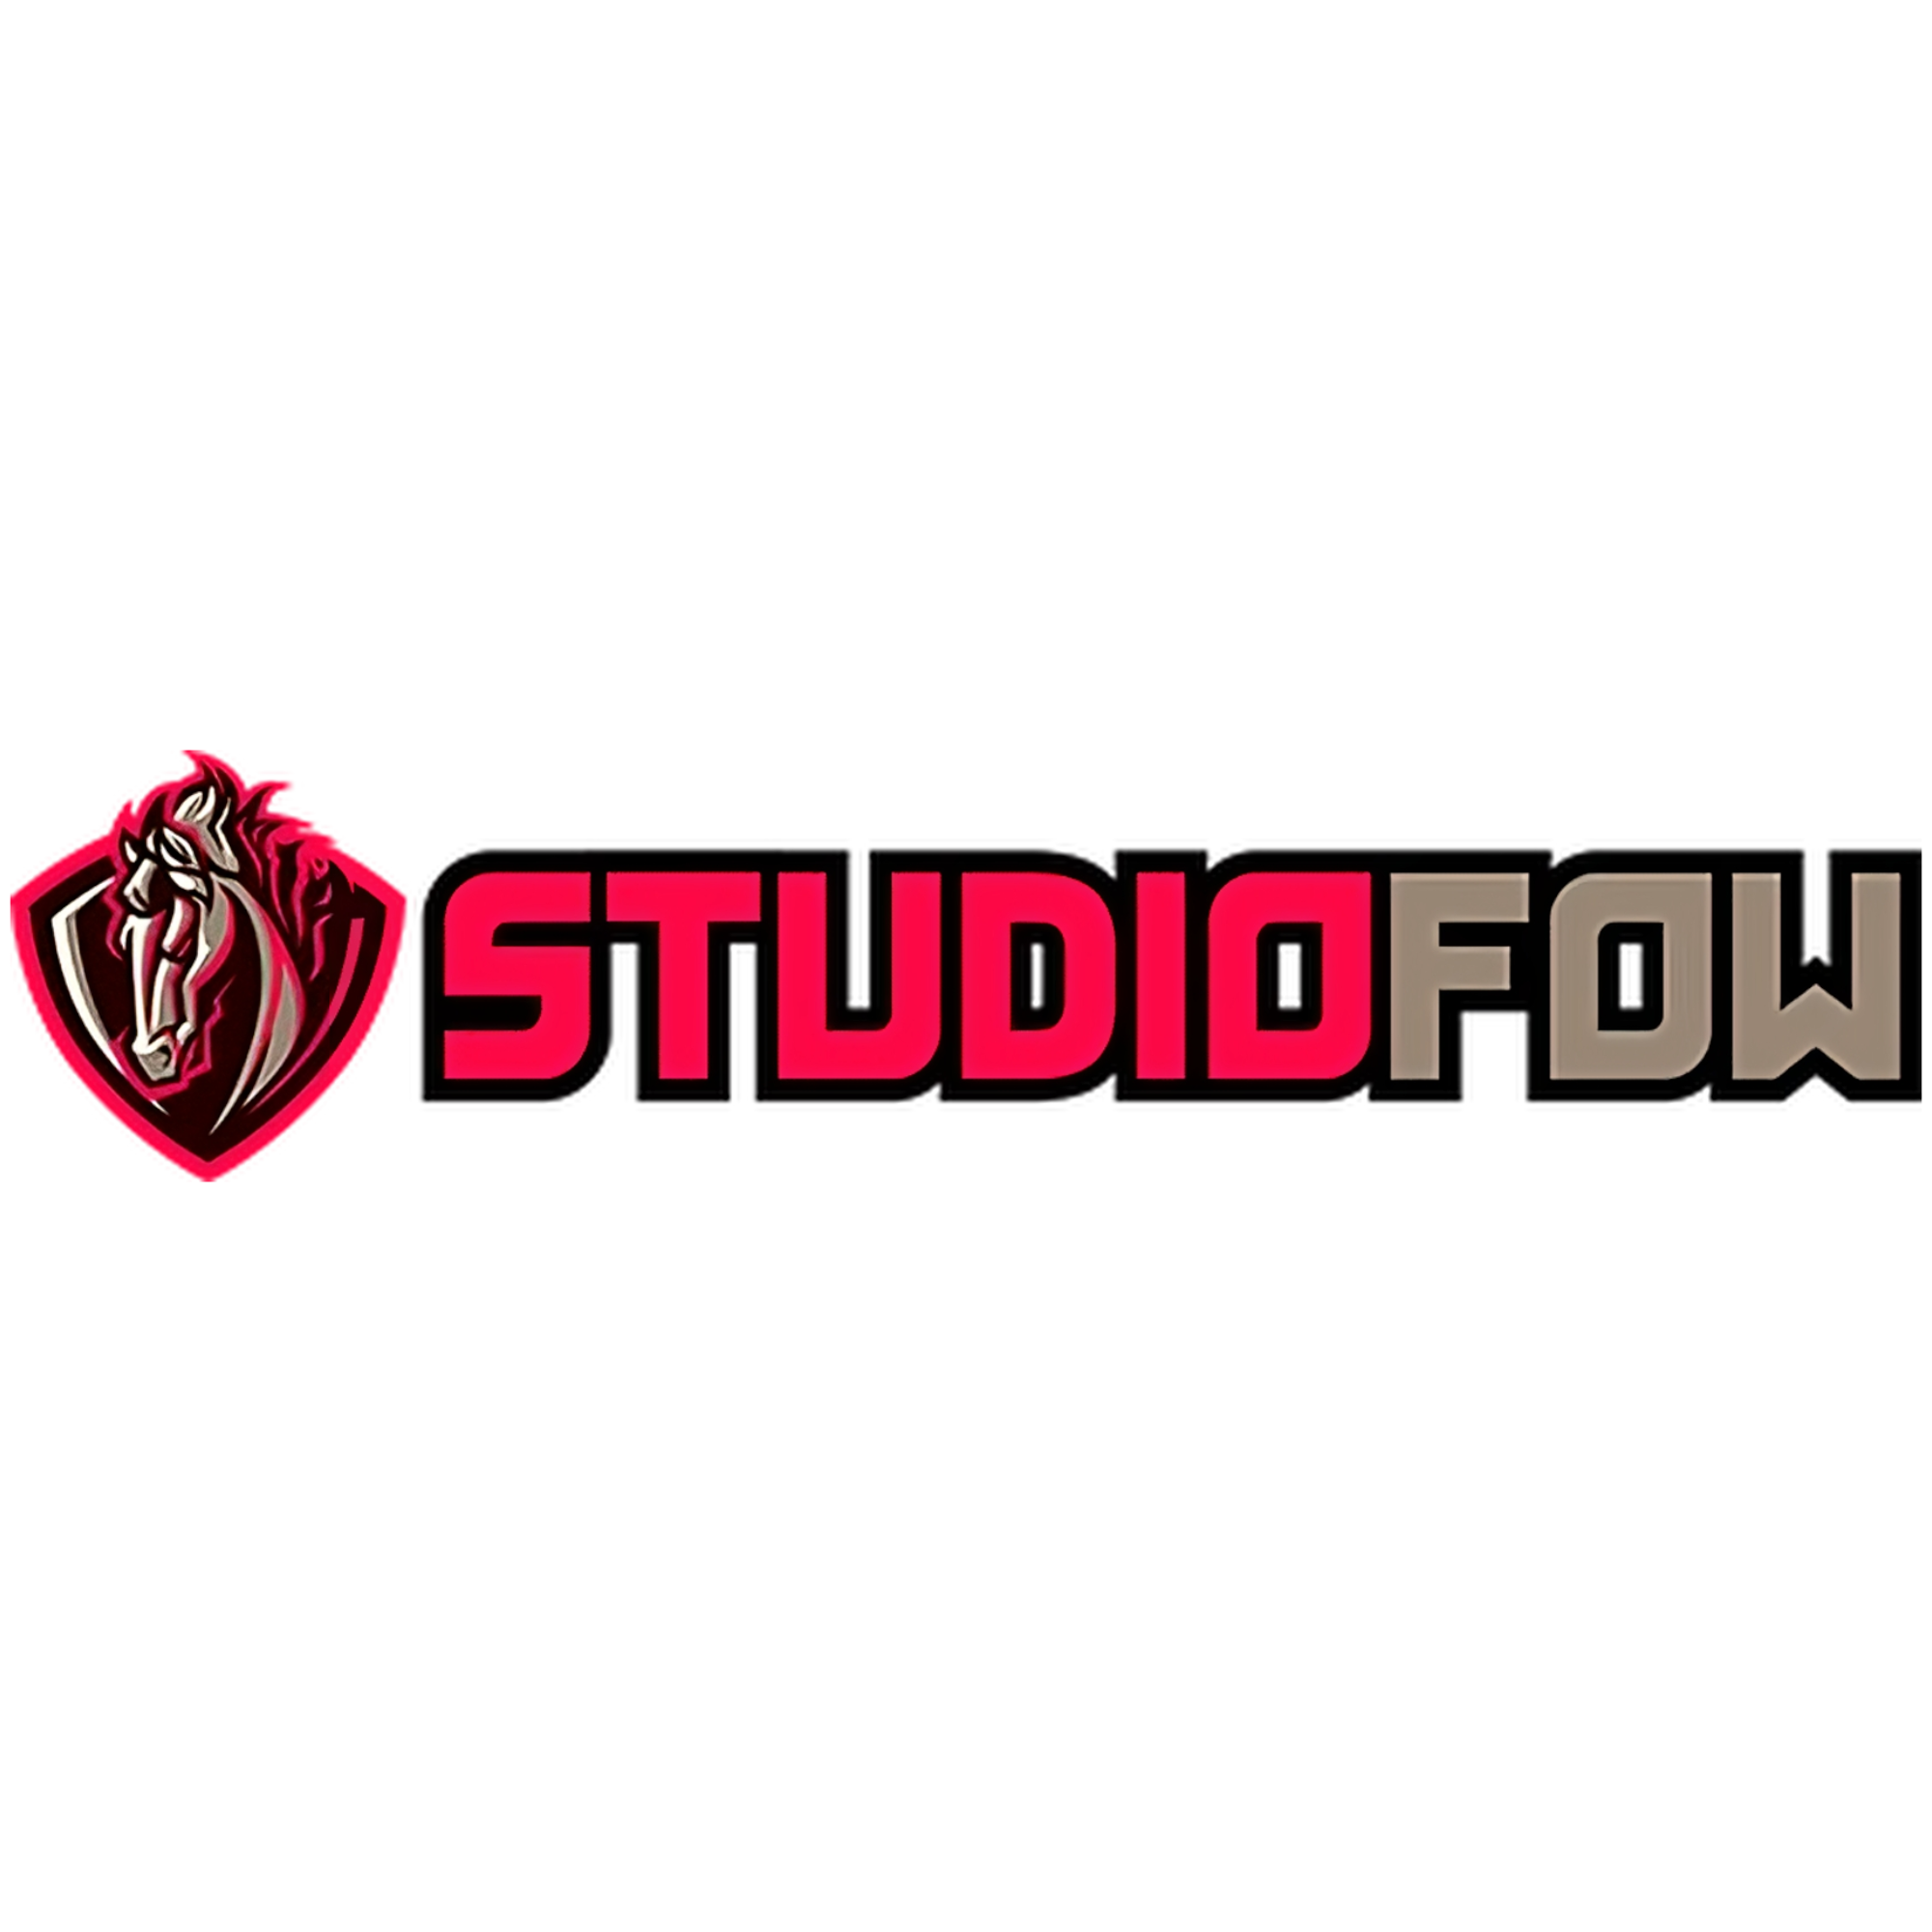 StudioFOW Logo